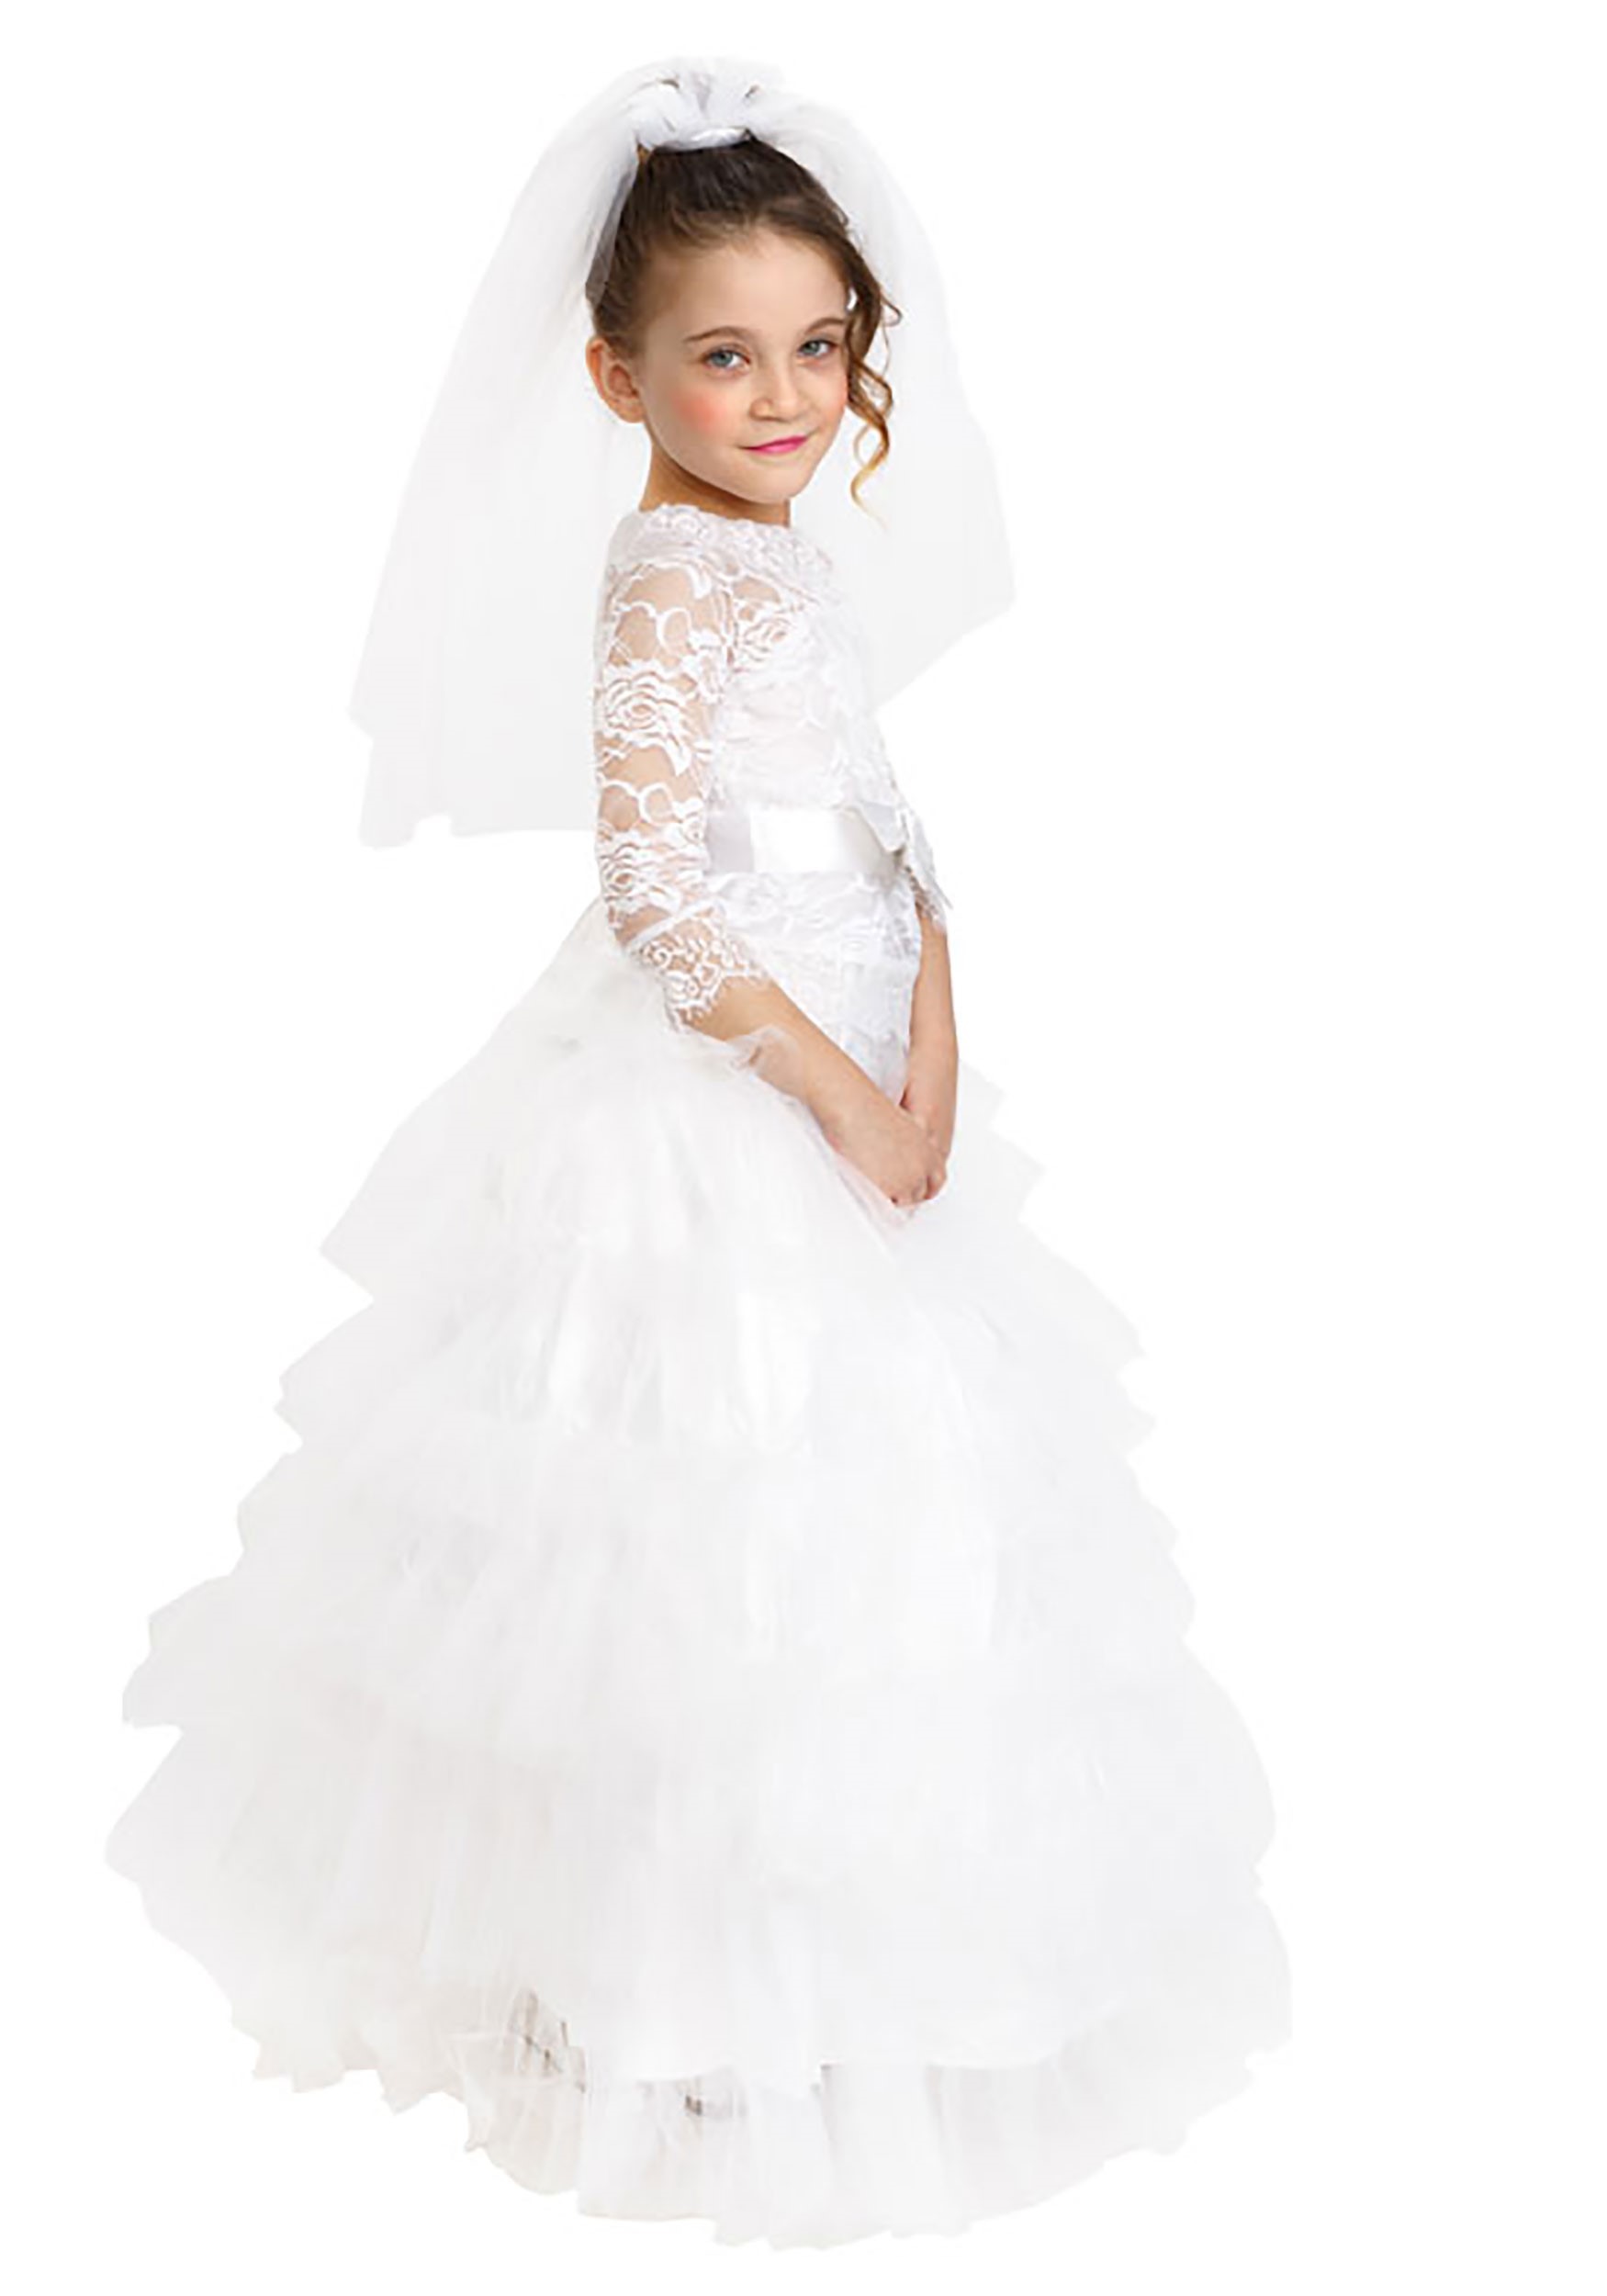 https://images.halloweencostumes.com/products/61957/1-1/girls-dreamy-bride-costume.jpg